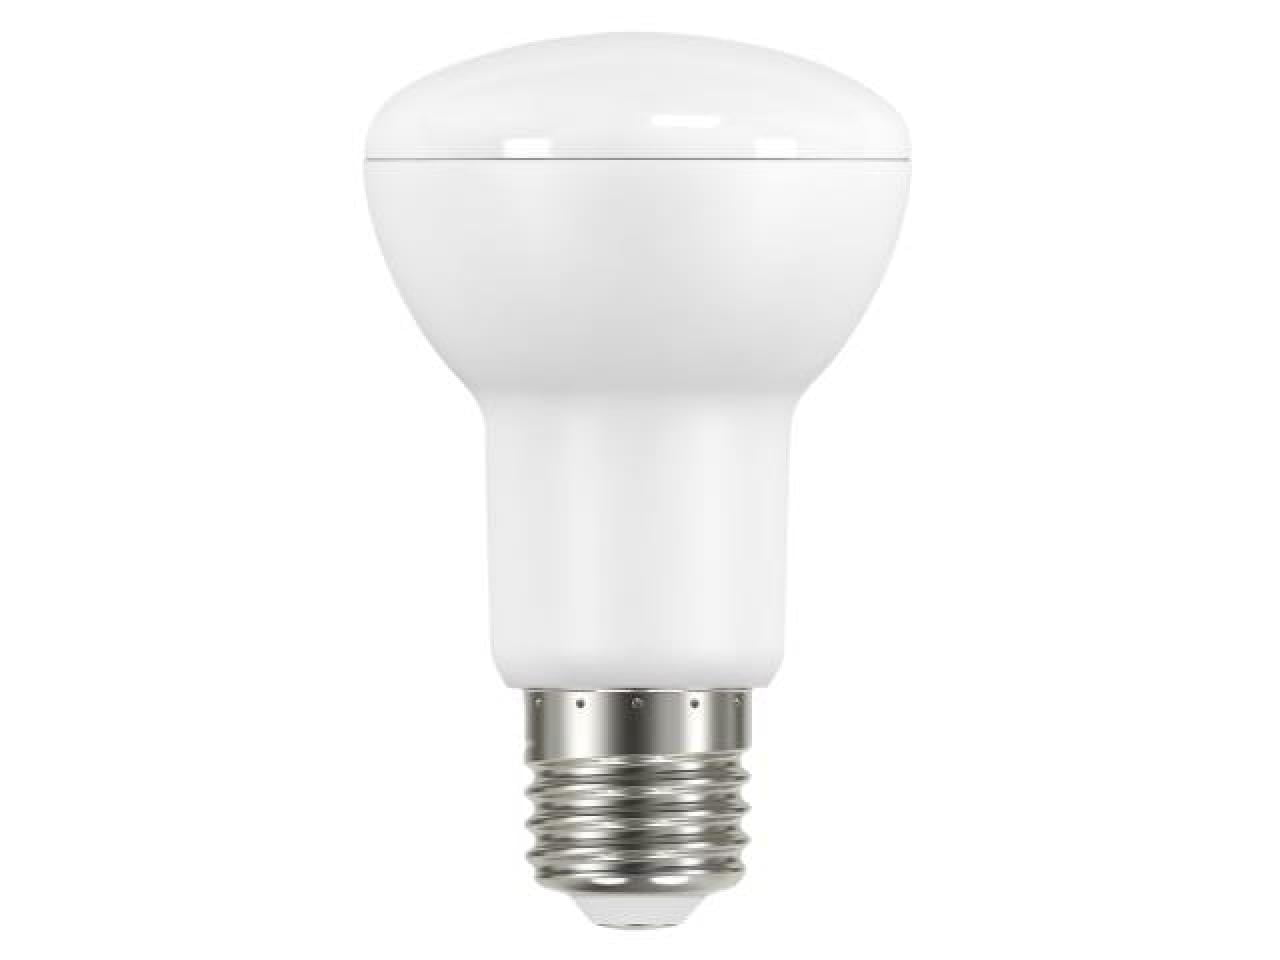 Energizer - LED ES (E27) HIGHTECH Reflector R63 Bulb, Warm White 600 lm  9.5W - Walmart.com